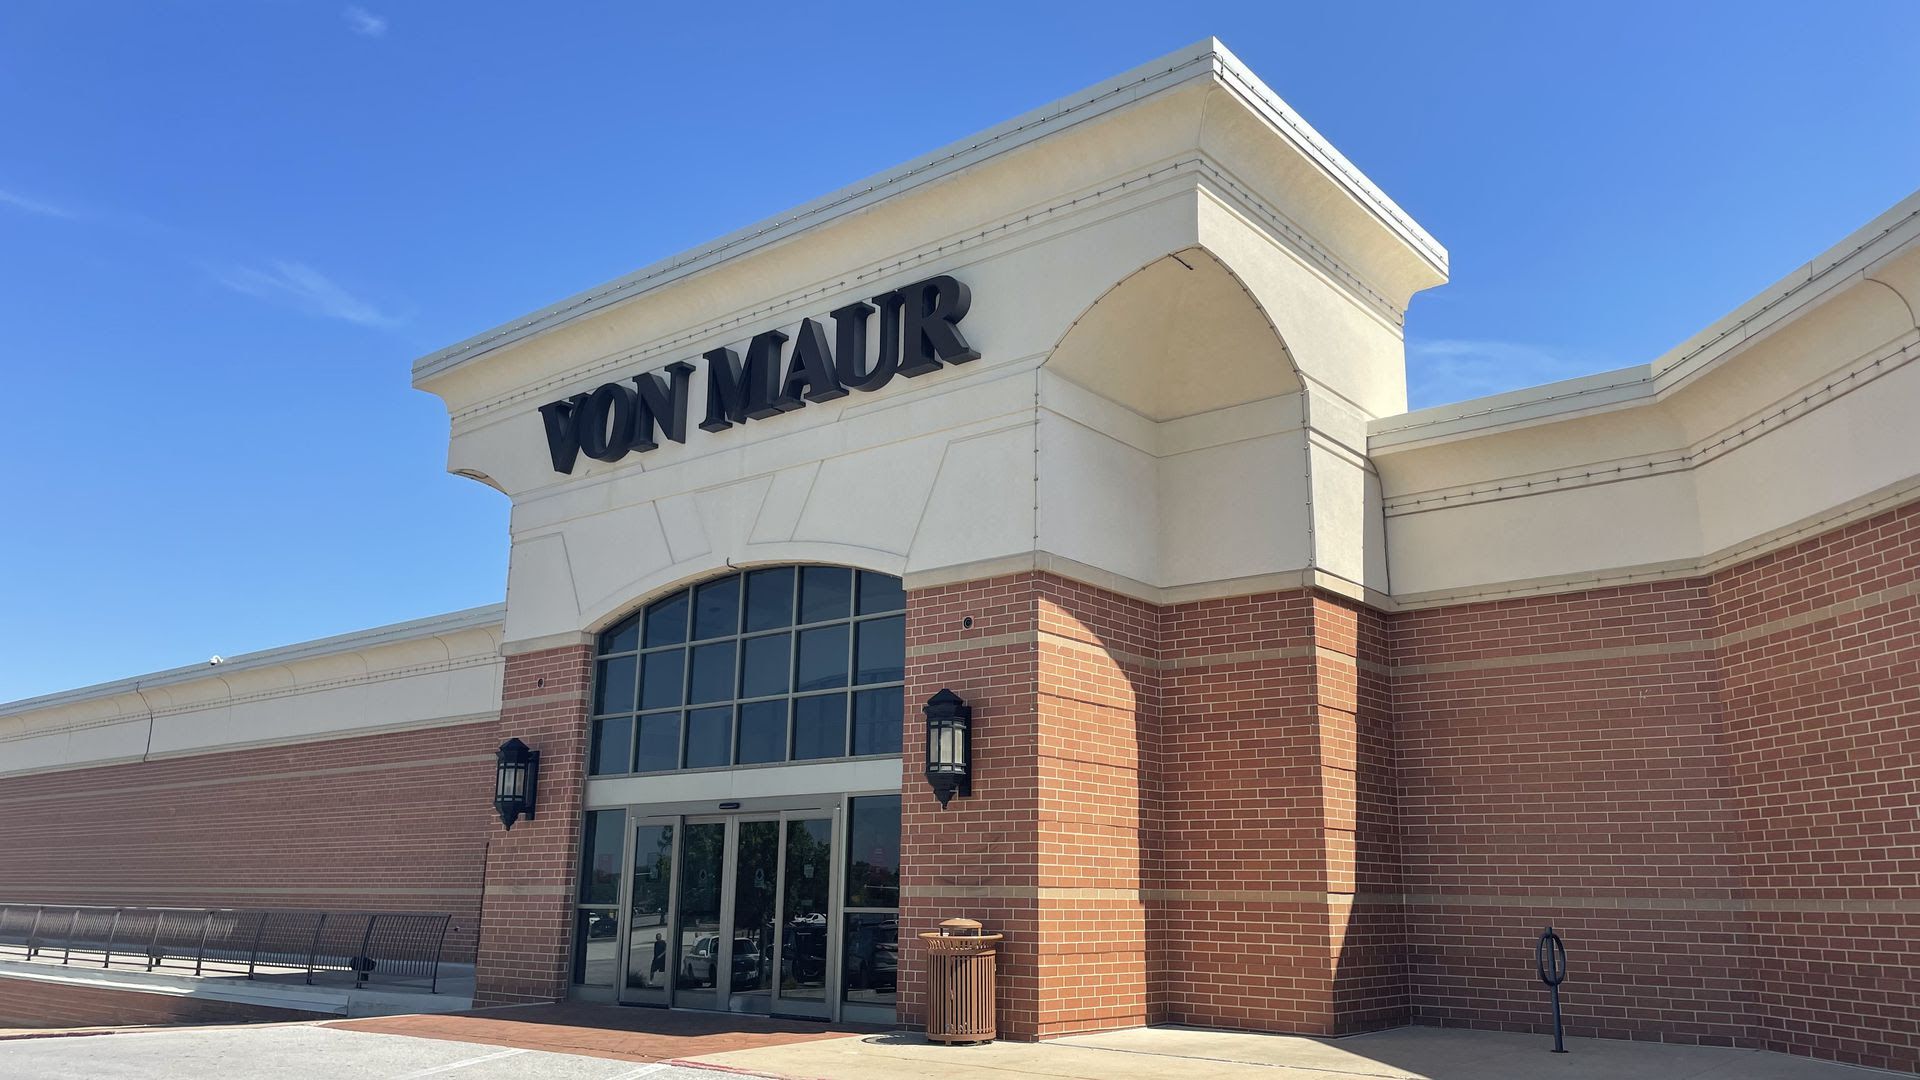 The Von Maur storefront at Valley West Mall in West Des Moines.